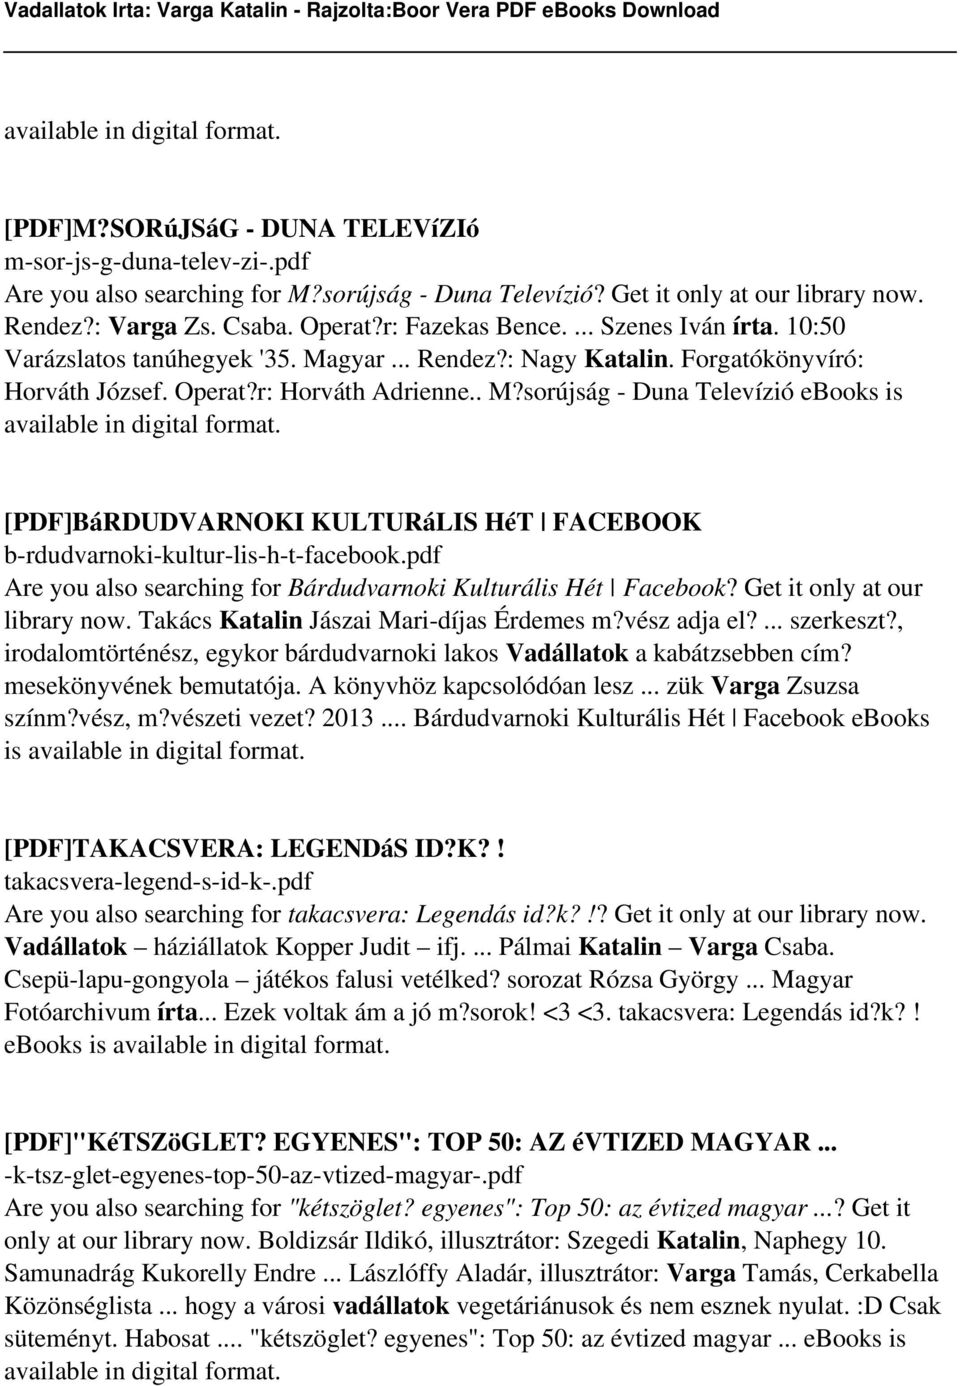 Vadallatok Irta: Varga Katalin - Rajzolta:Boor Vera PDF - PDF Free Download